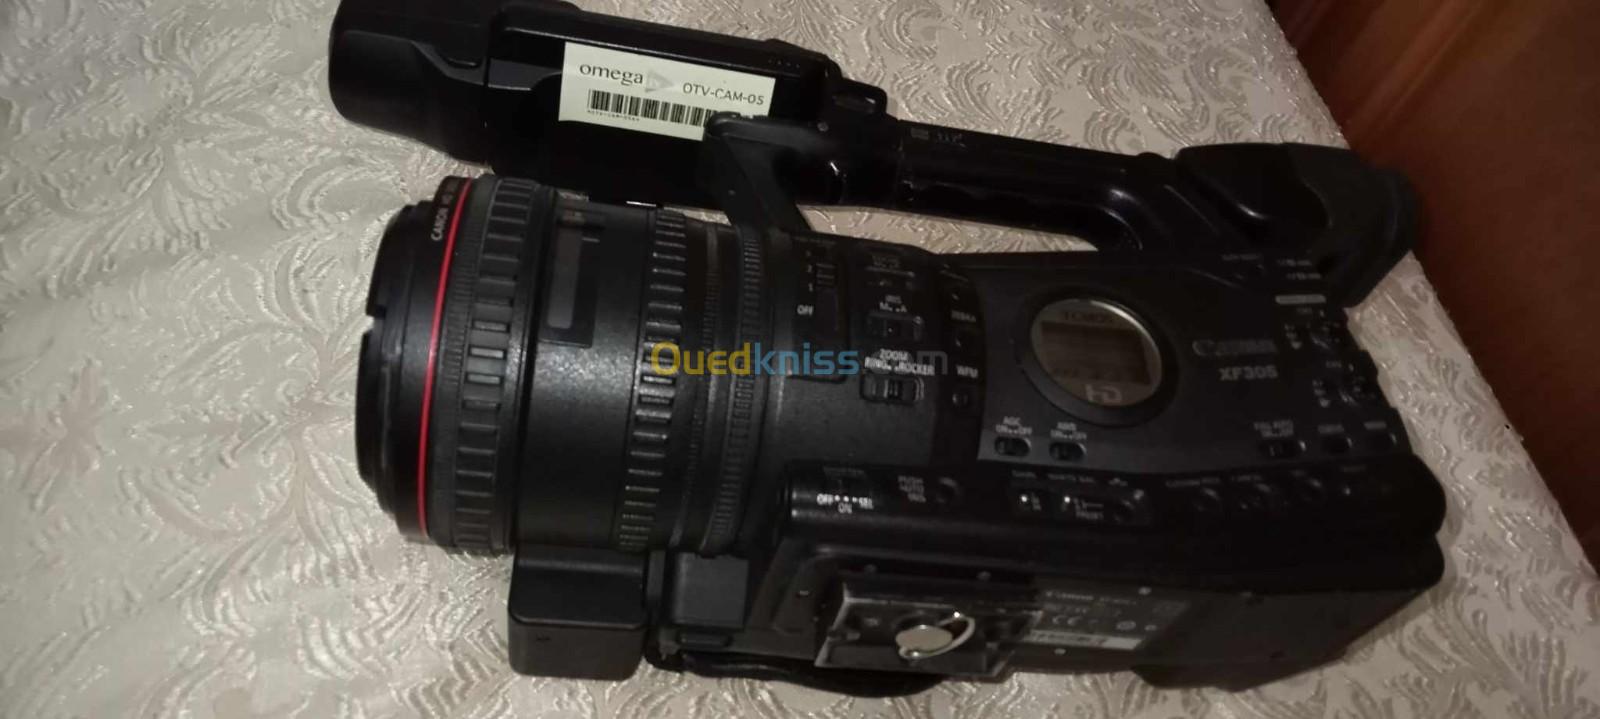 Camera Canon XF 305